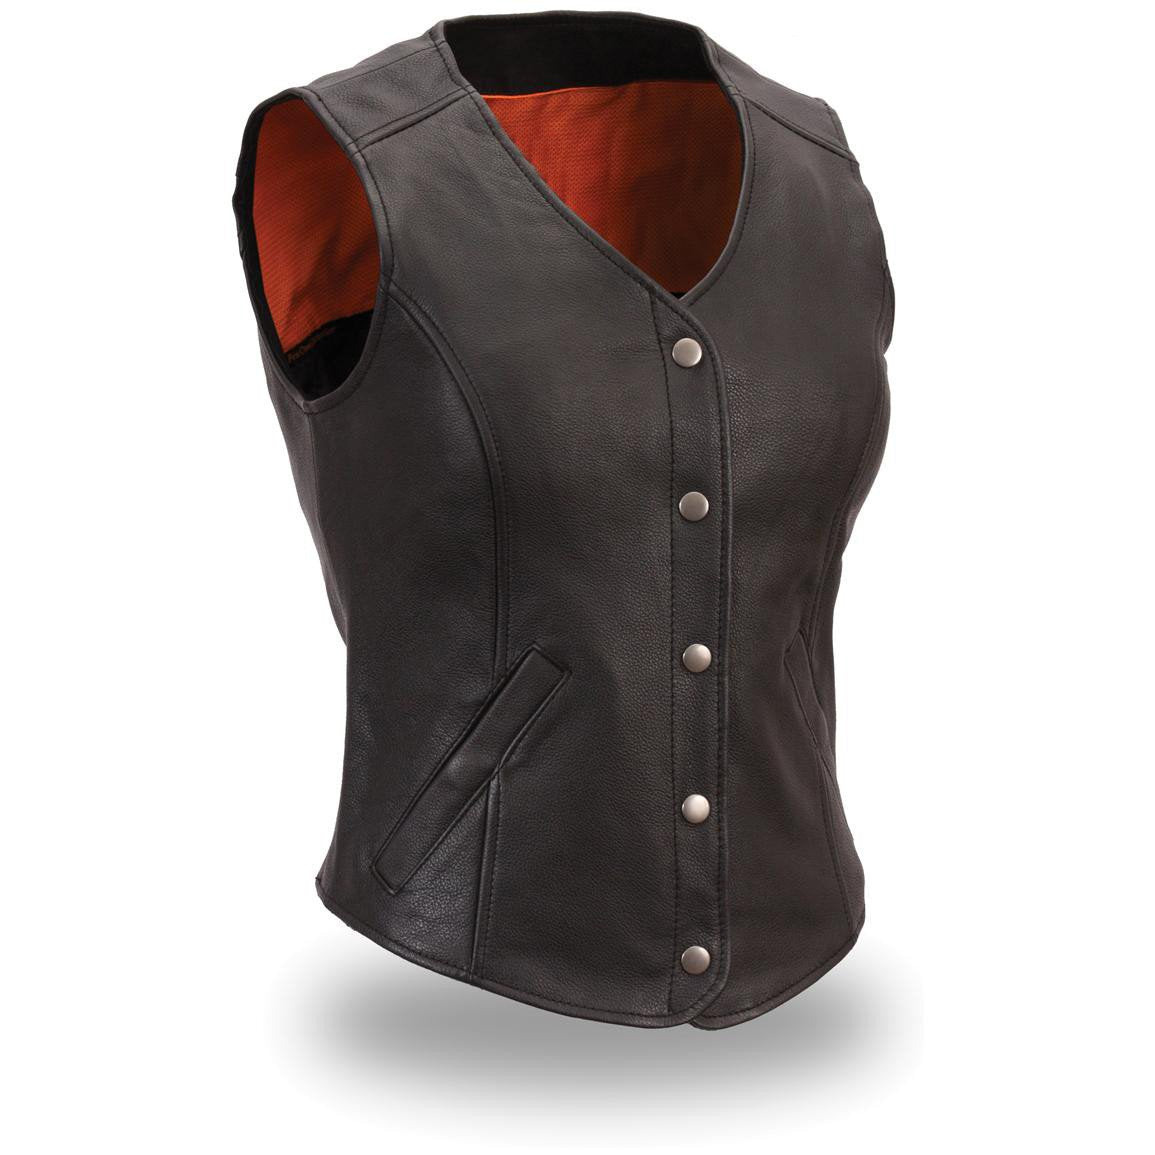 External Protections Business elegant leather vest